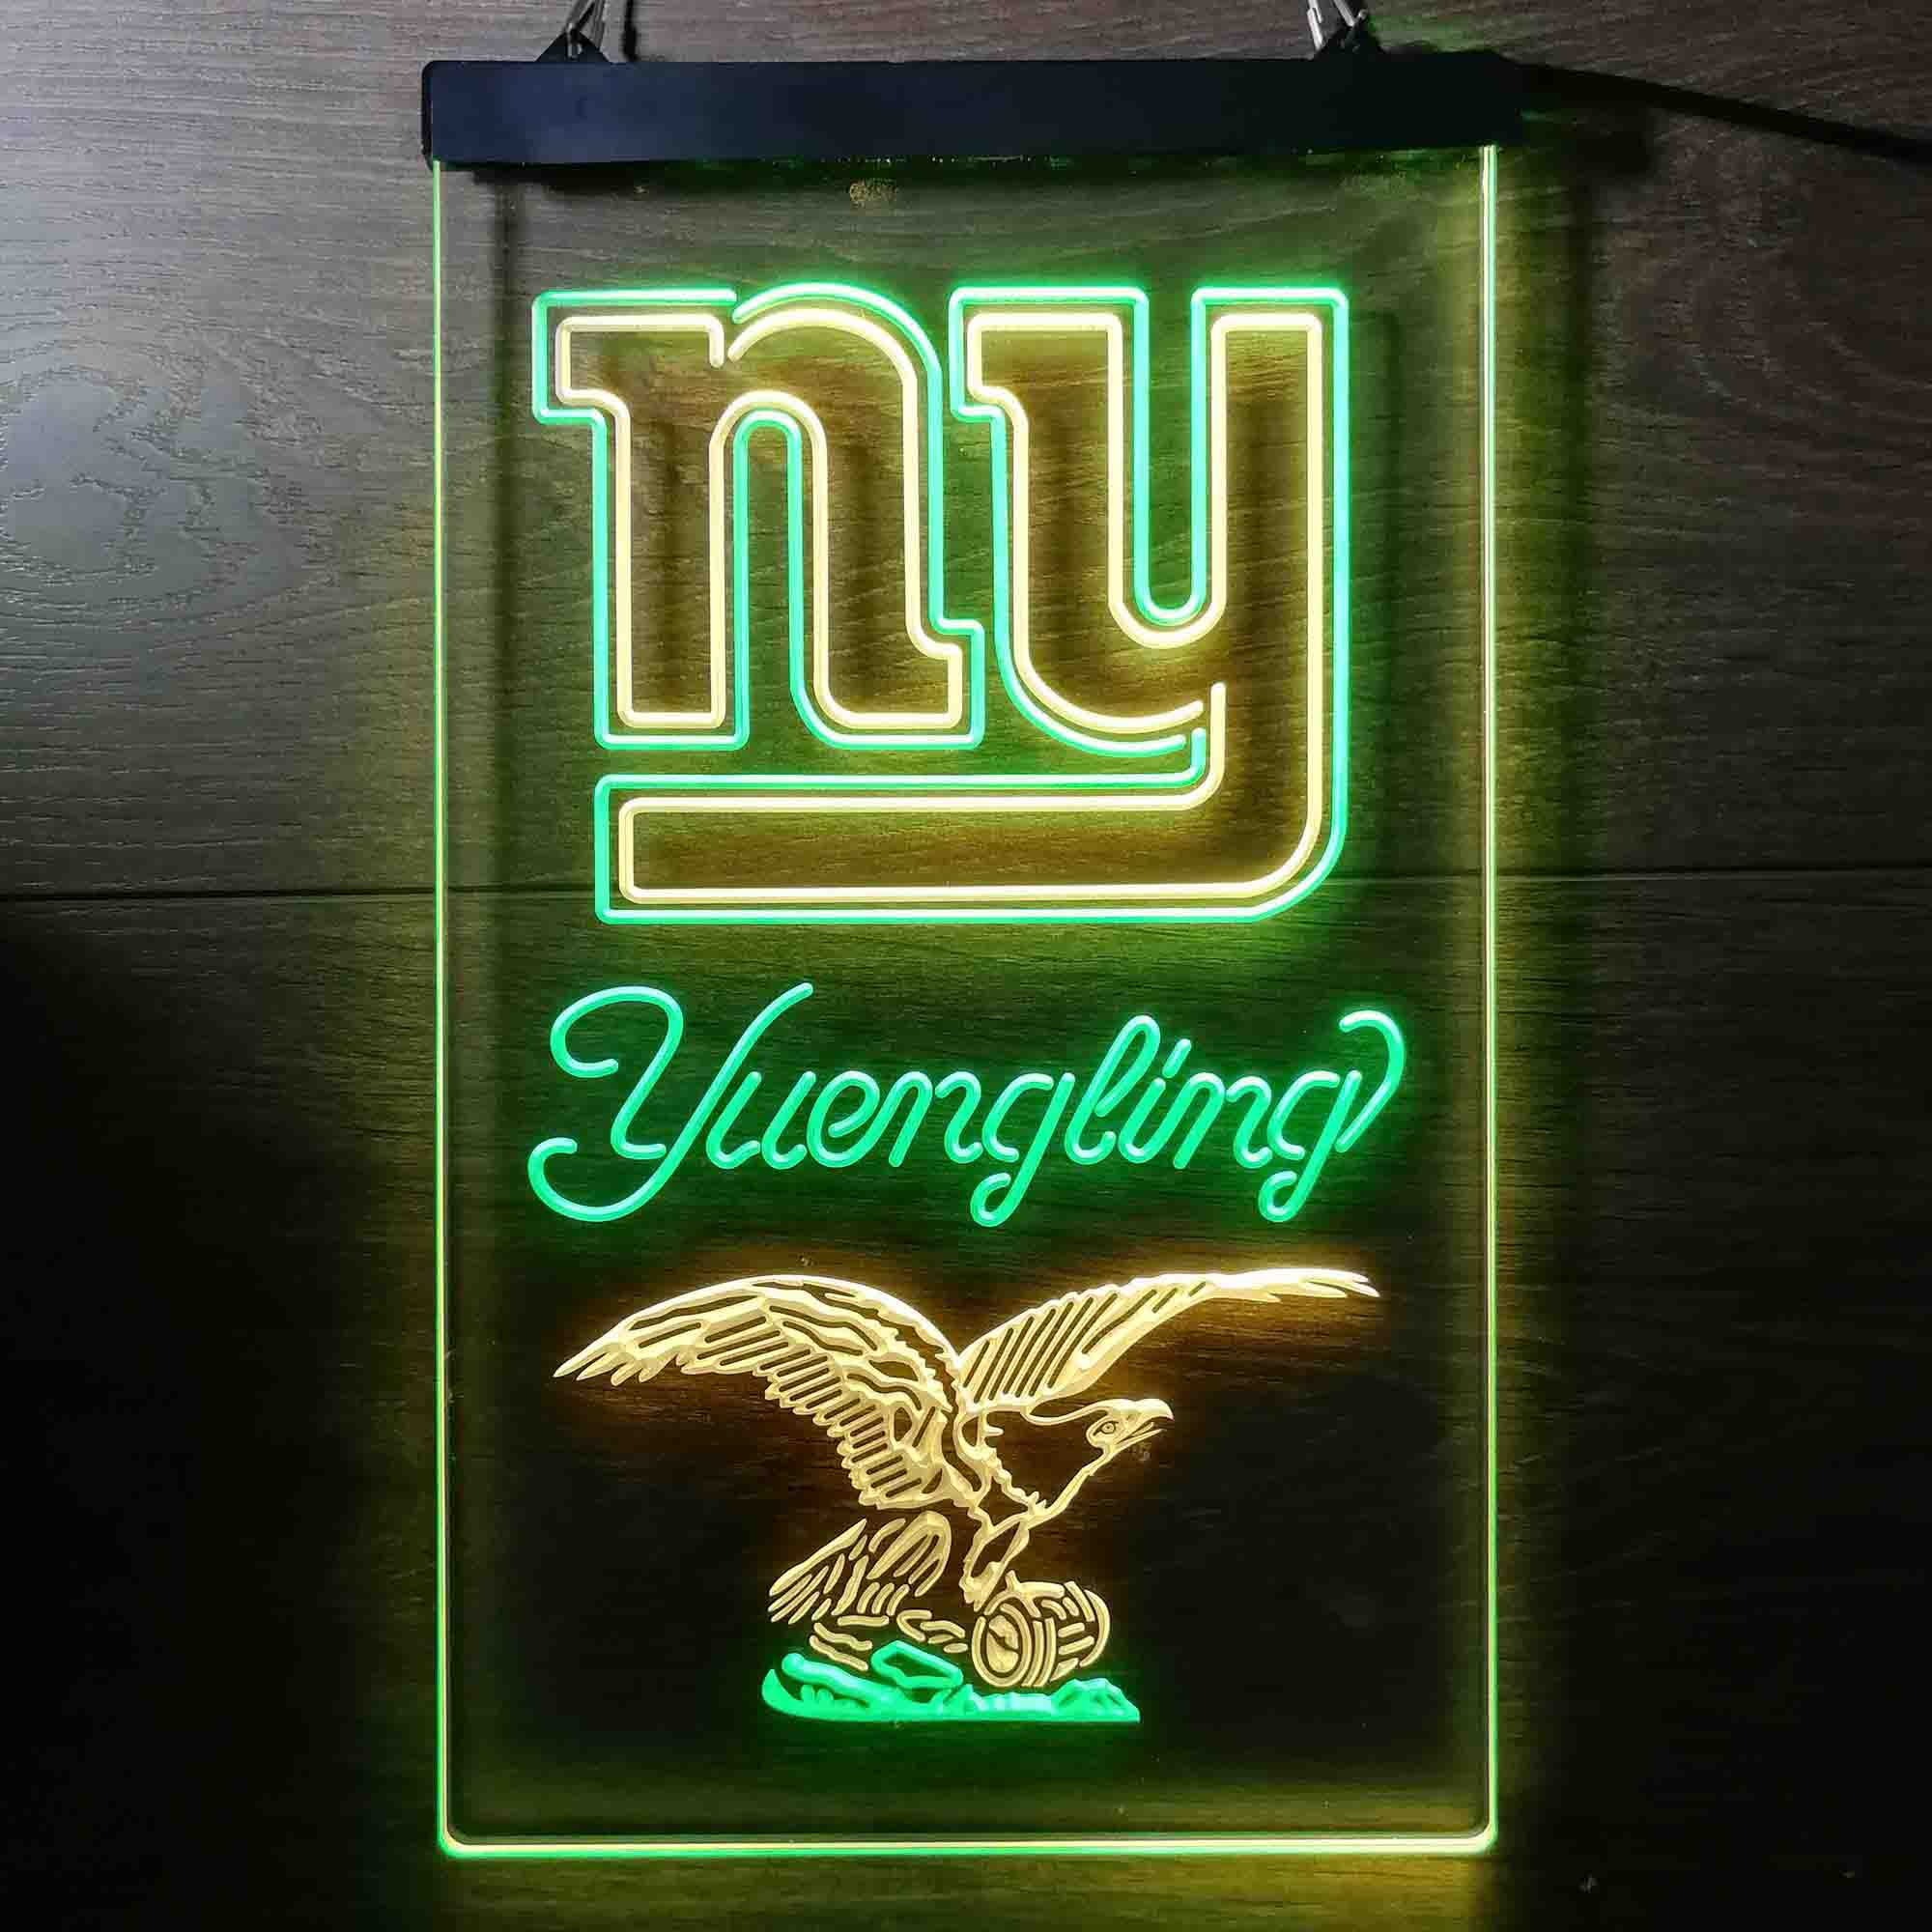 Yuengling Bar New York Giants Est. 1925 LED Neon Sign